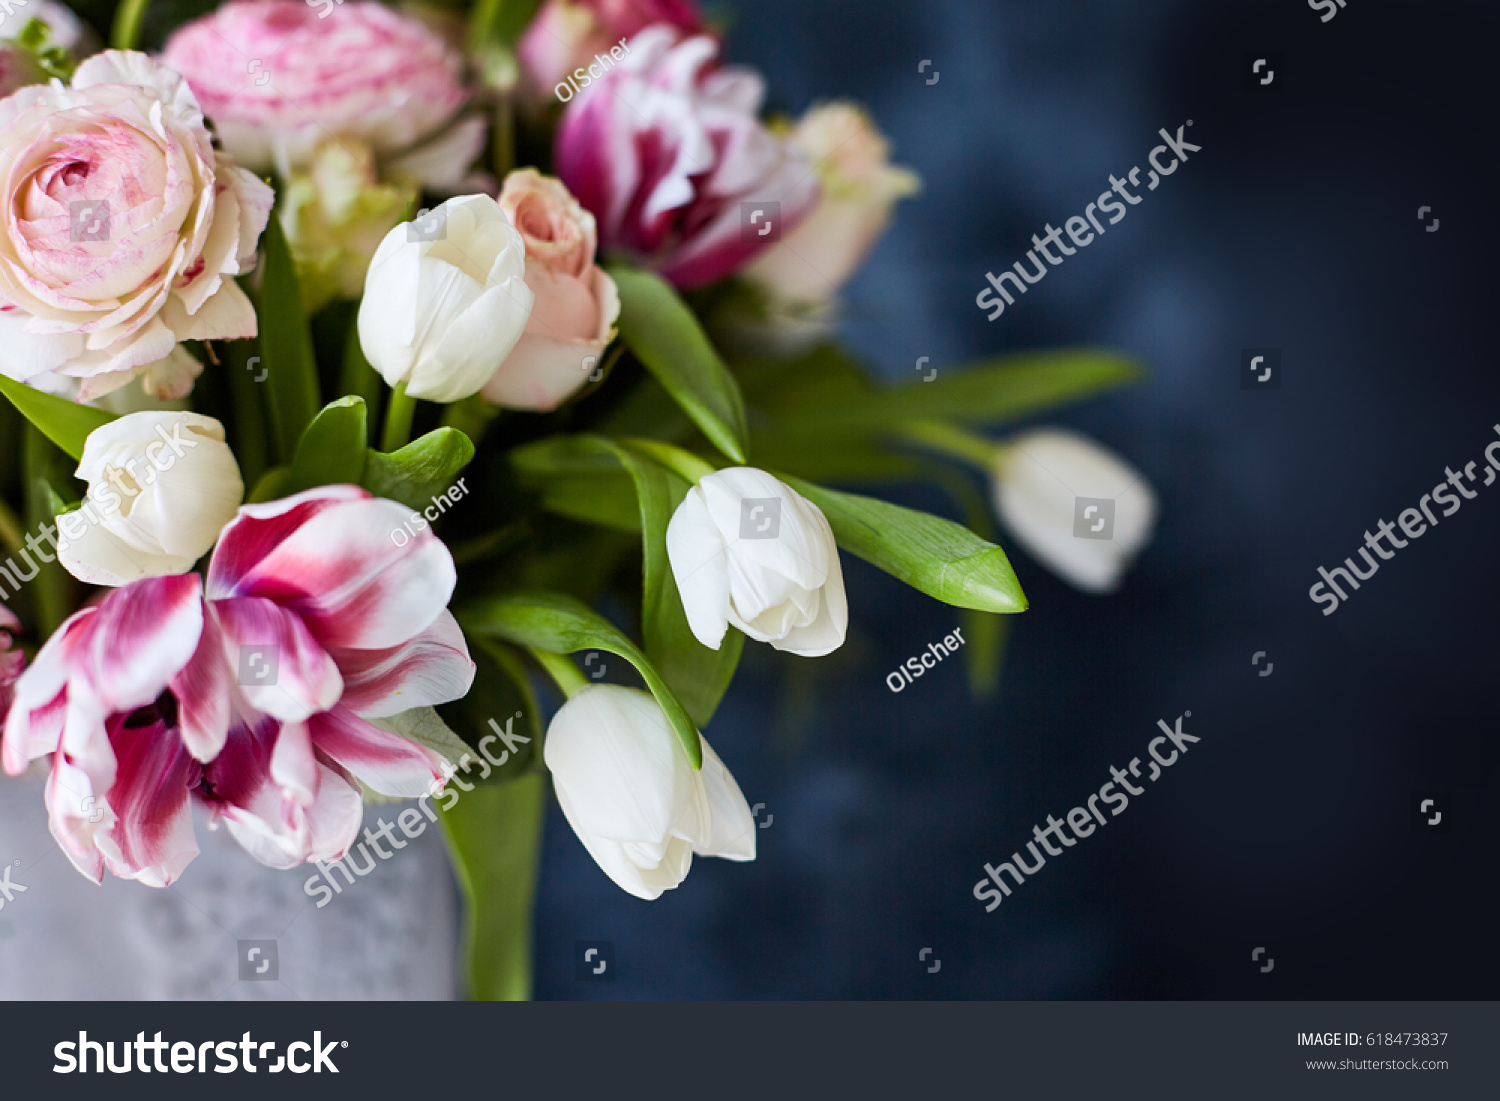 
Flower arrangement with tulips and ranunculus on a white wooden floor. Spring flower arrangement in a vase #618473837